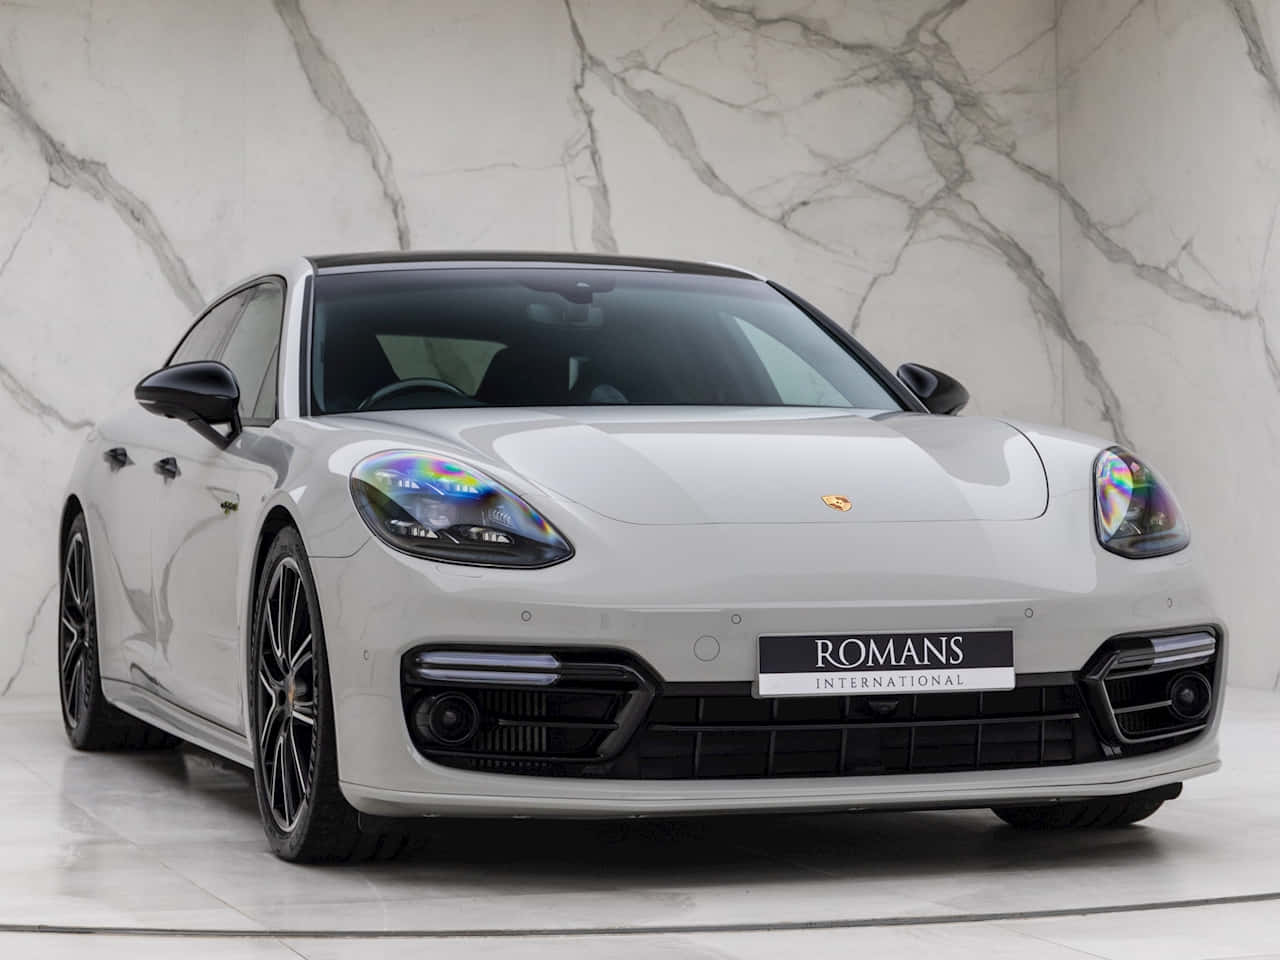 Luxury In Motion - The Porsche Panamera Wallpaper